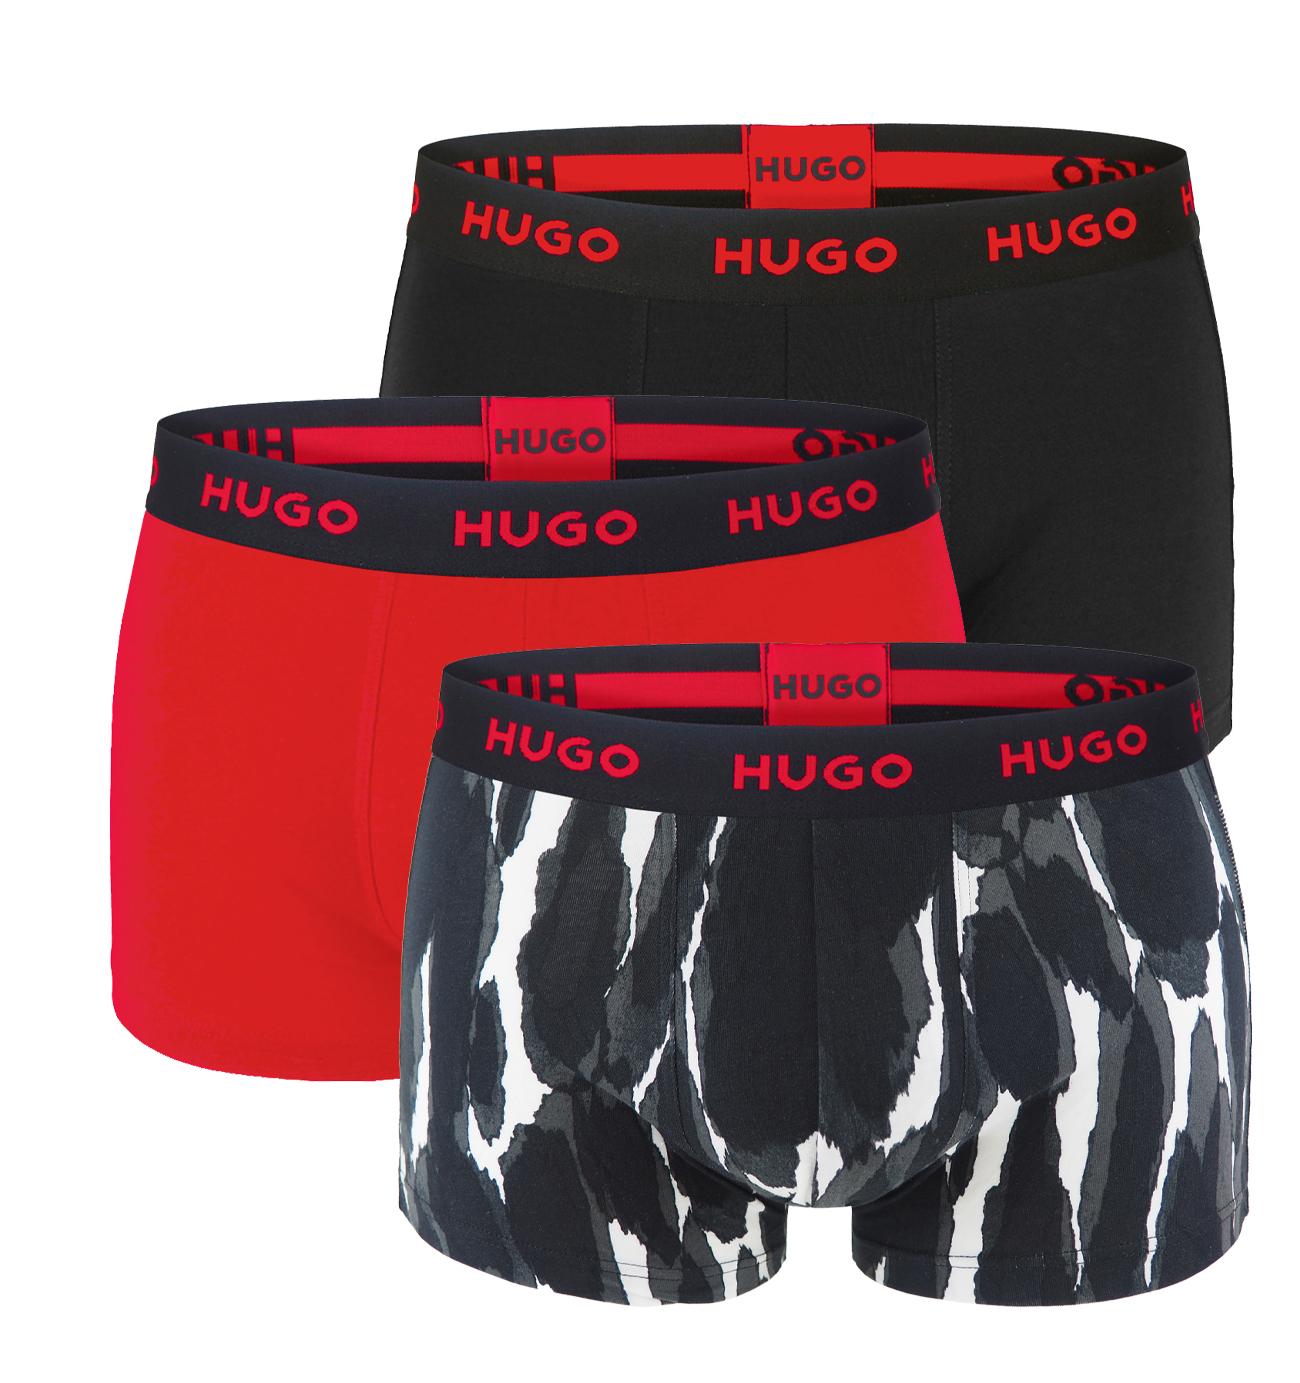 HUGO - boxerky 3PACK cotton stretch black & red with color shapes - limitovaná fashion edícia (HUGO BOSS)